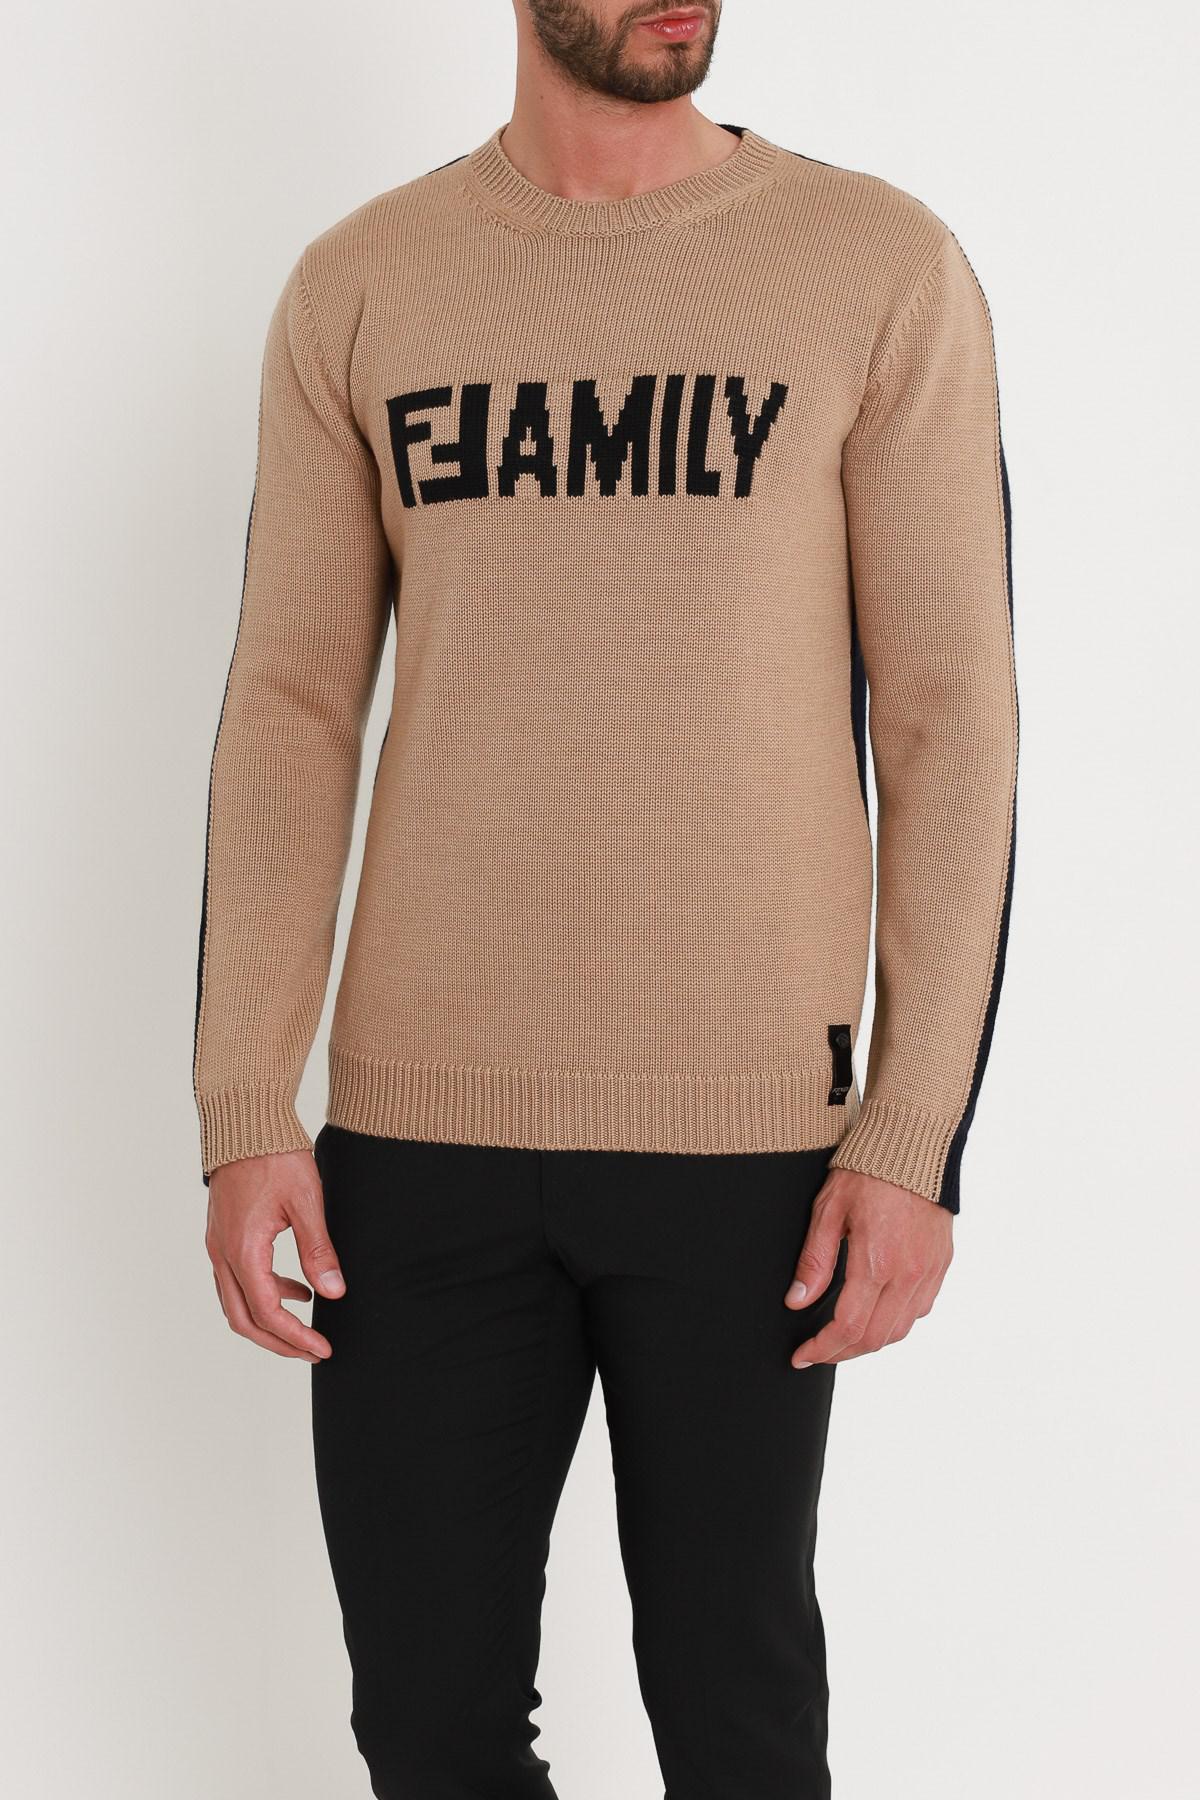 Fendi Wool Ff Family Sweater for Men - Lyst